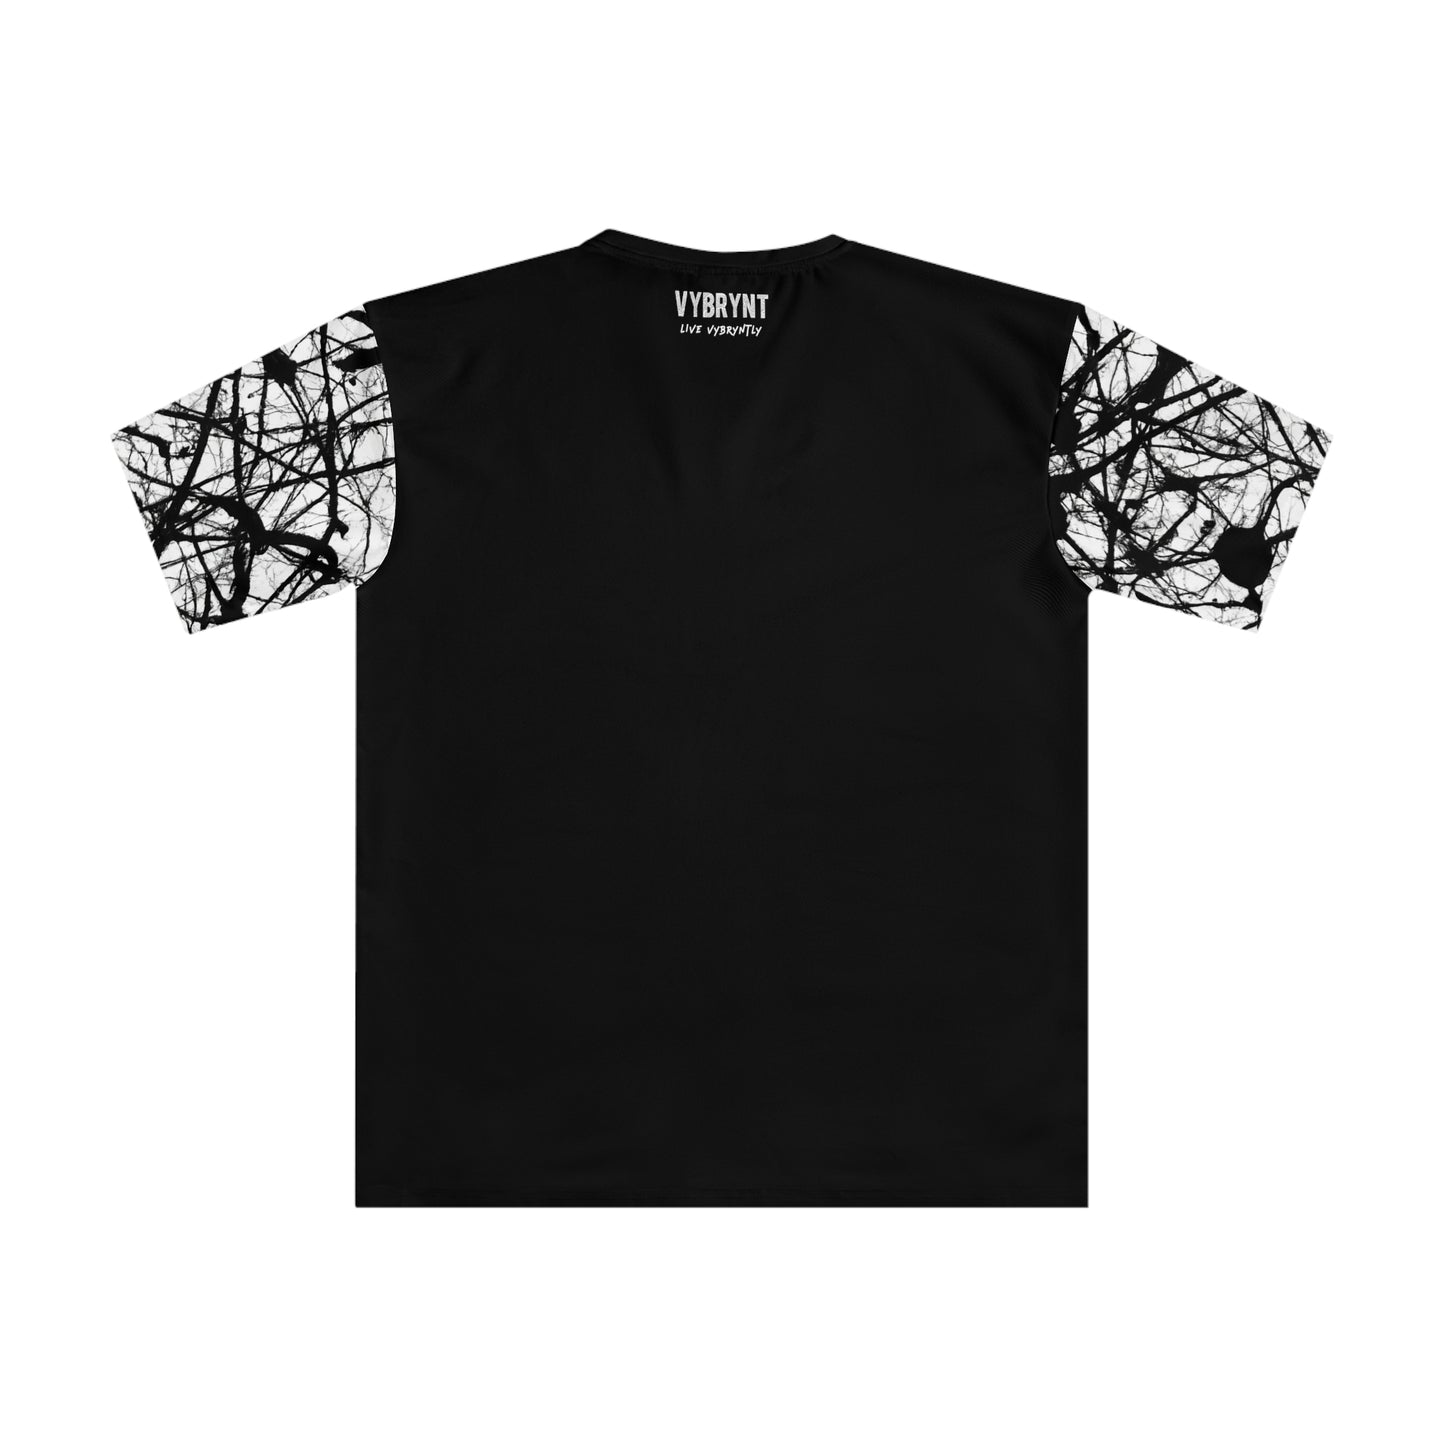 Black & White Drizzles Men's T-Shirt